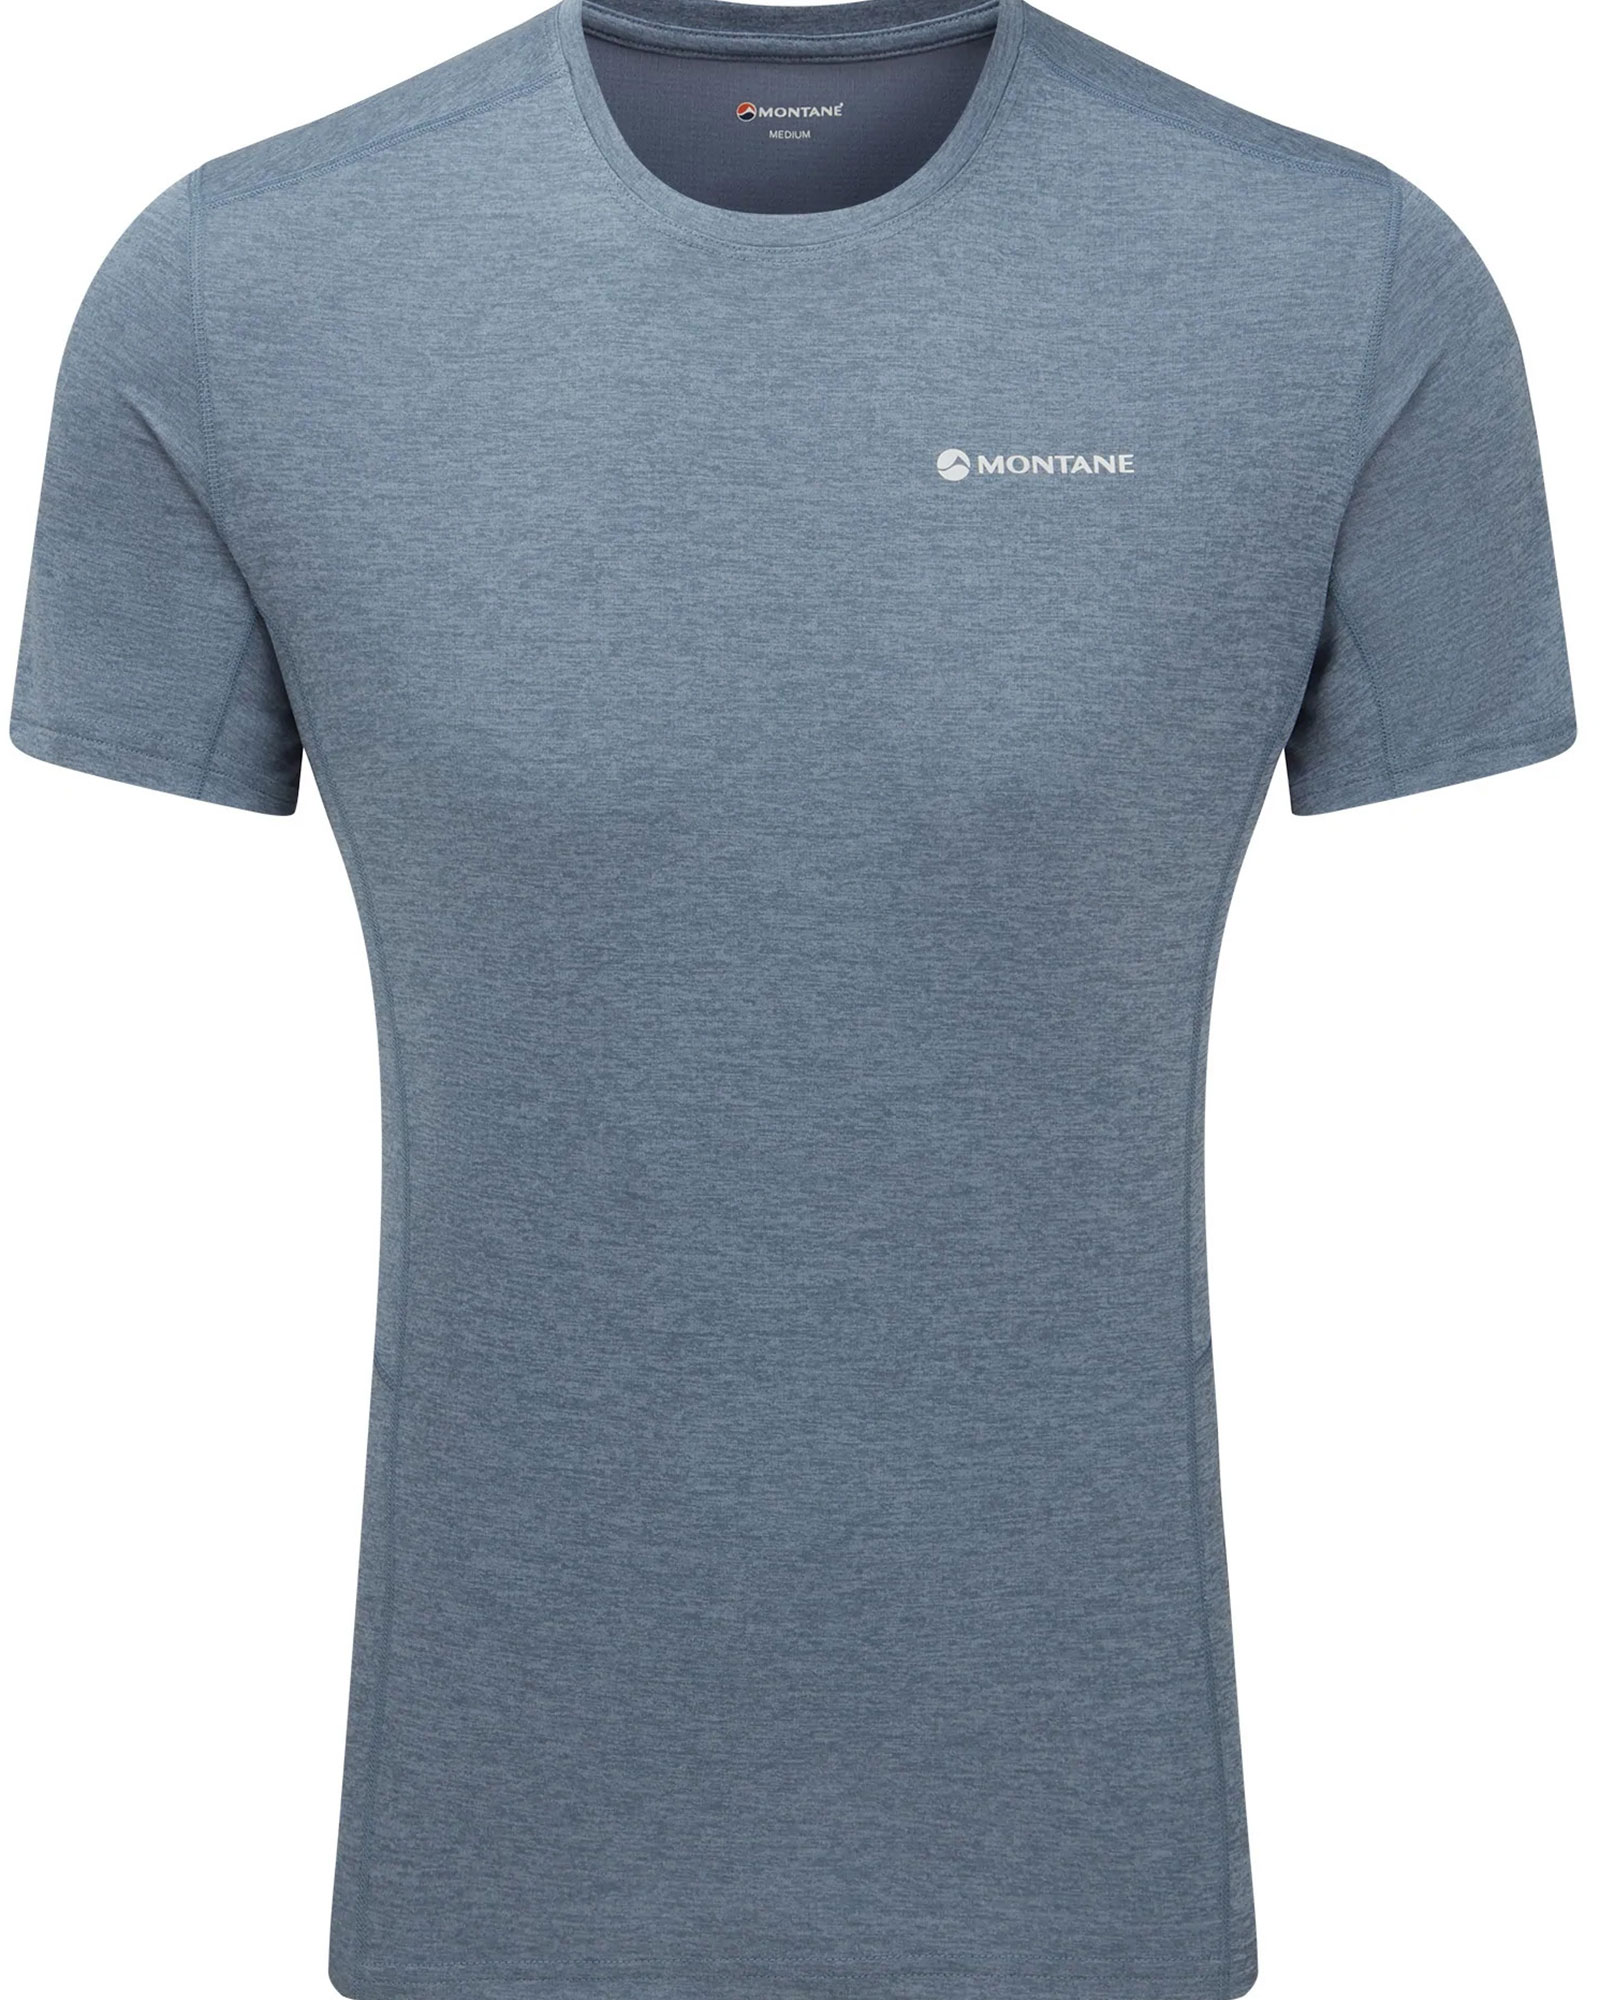 Montane Dart Shorts Sleeve Men’s T Shirt - Stone Blue XL